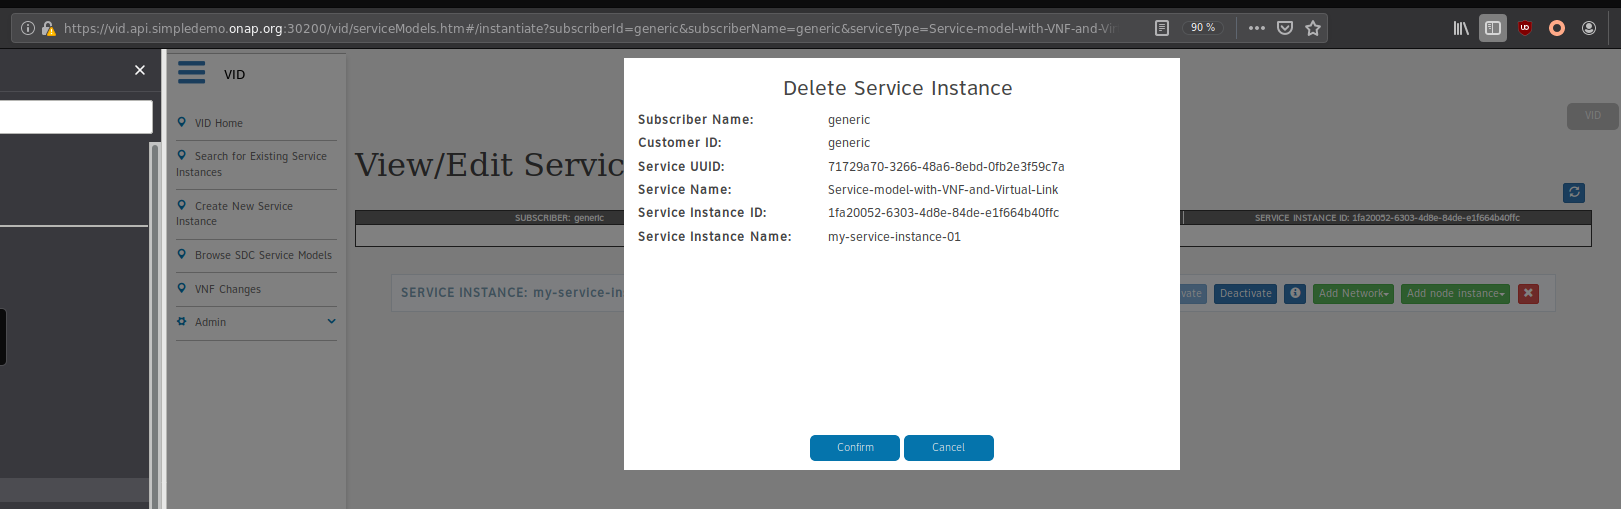 docs/images/delete-service-instance.png